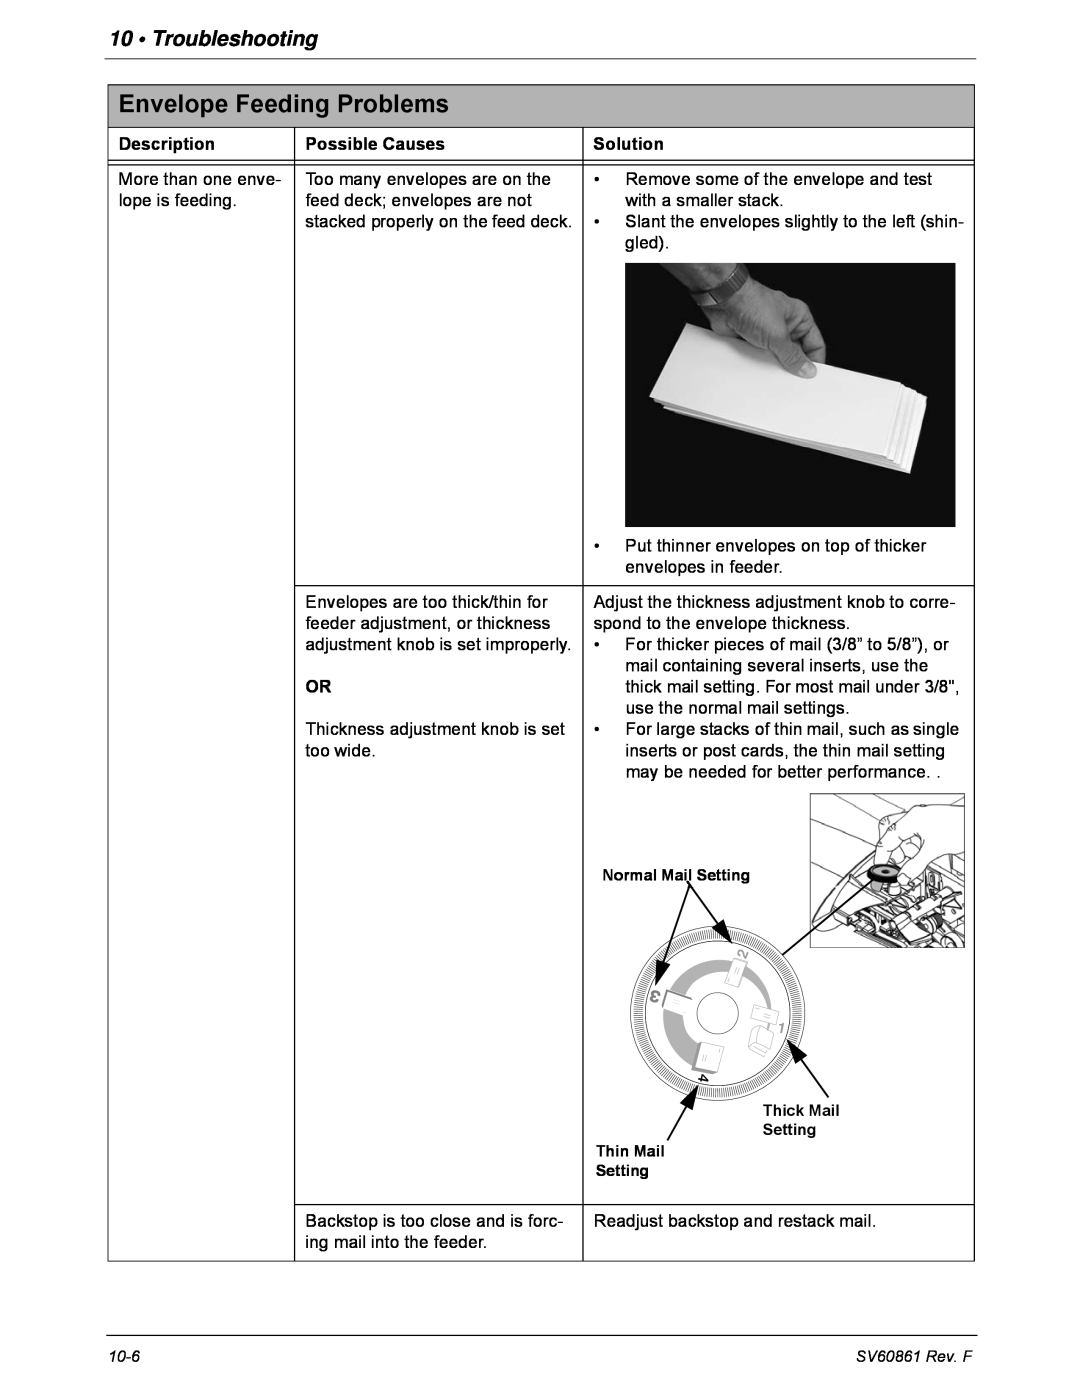 Pitney Bowes DM900, DM800 manual Envelope Feeding Problems, Troubleshooting, Description, Possible Causes, Solution 